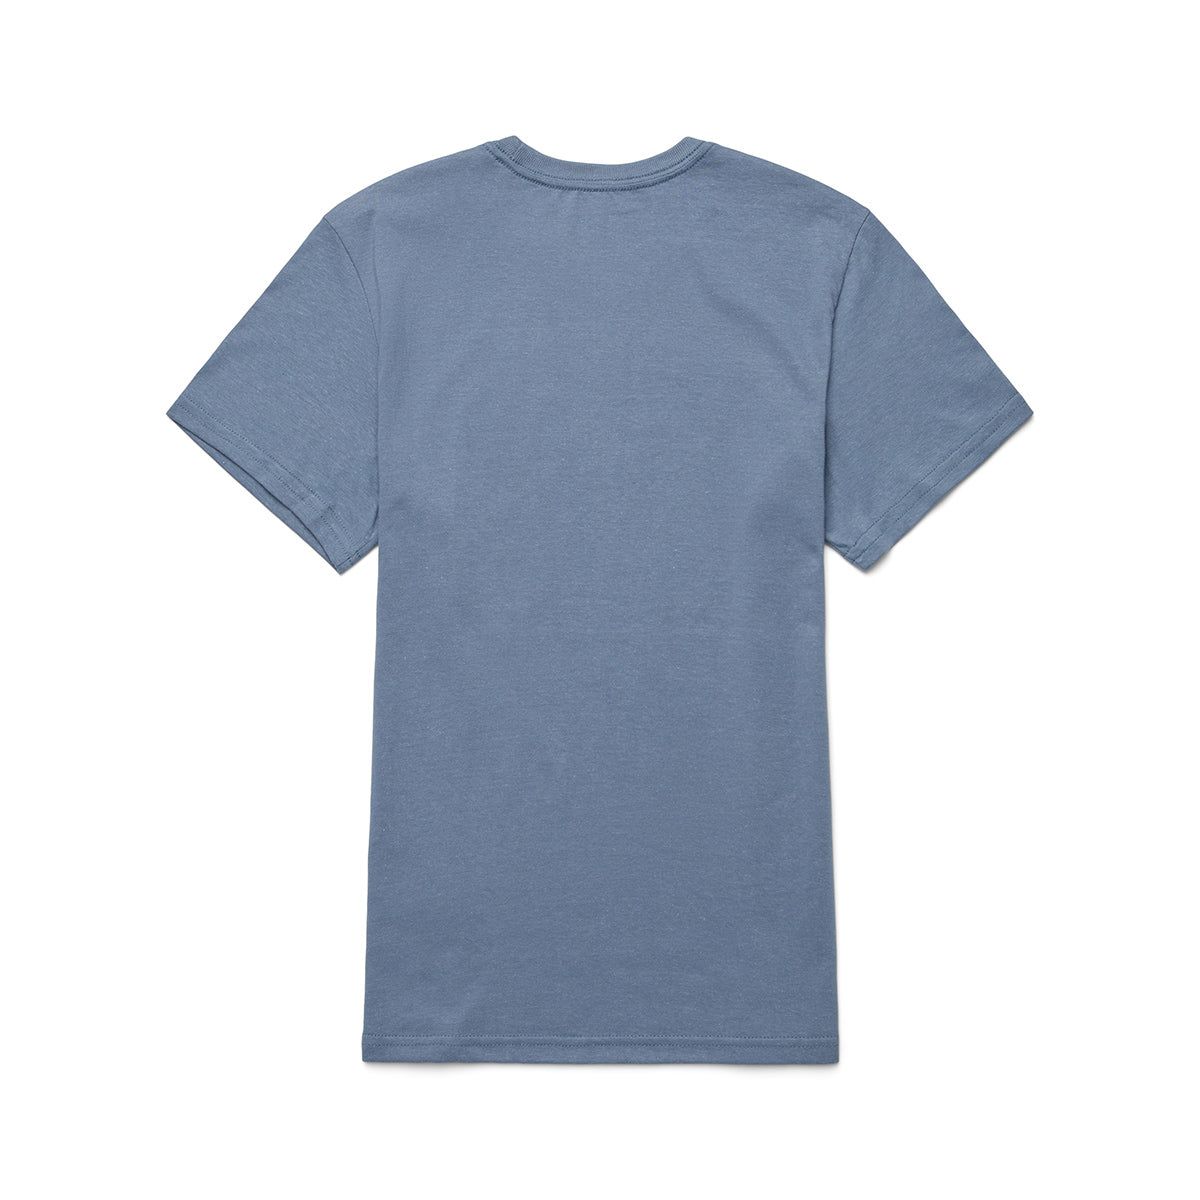 Cotopaxi Utopia T-Shirt - WOMENS ユートピア ティーシャツ レディース